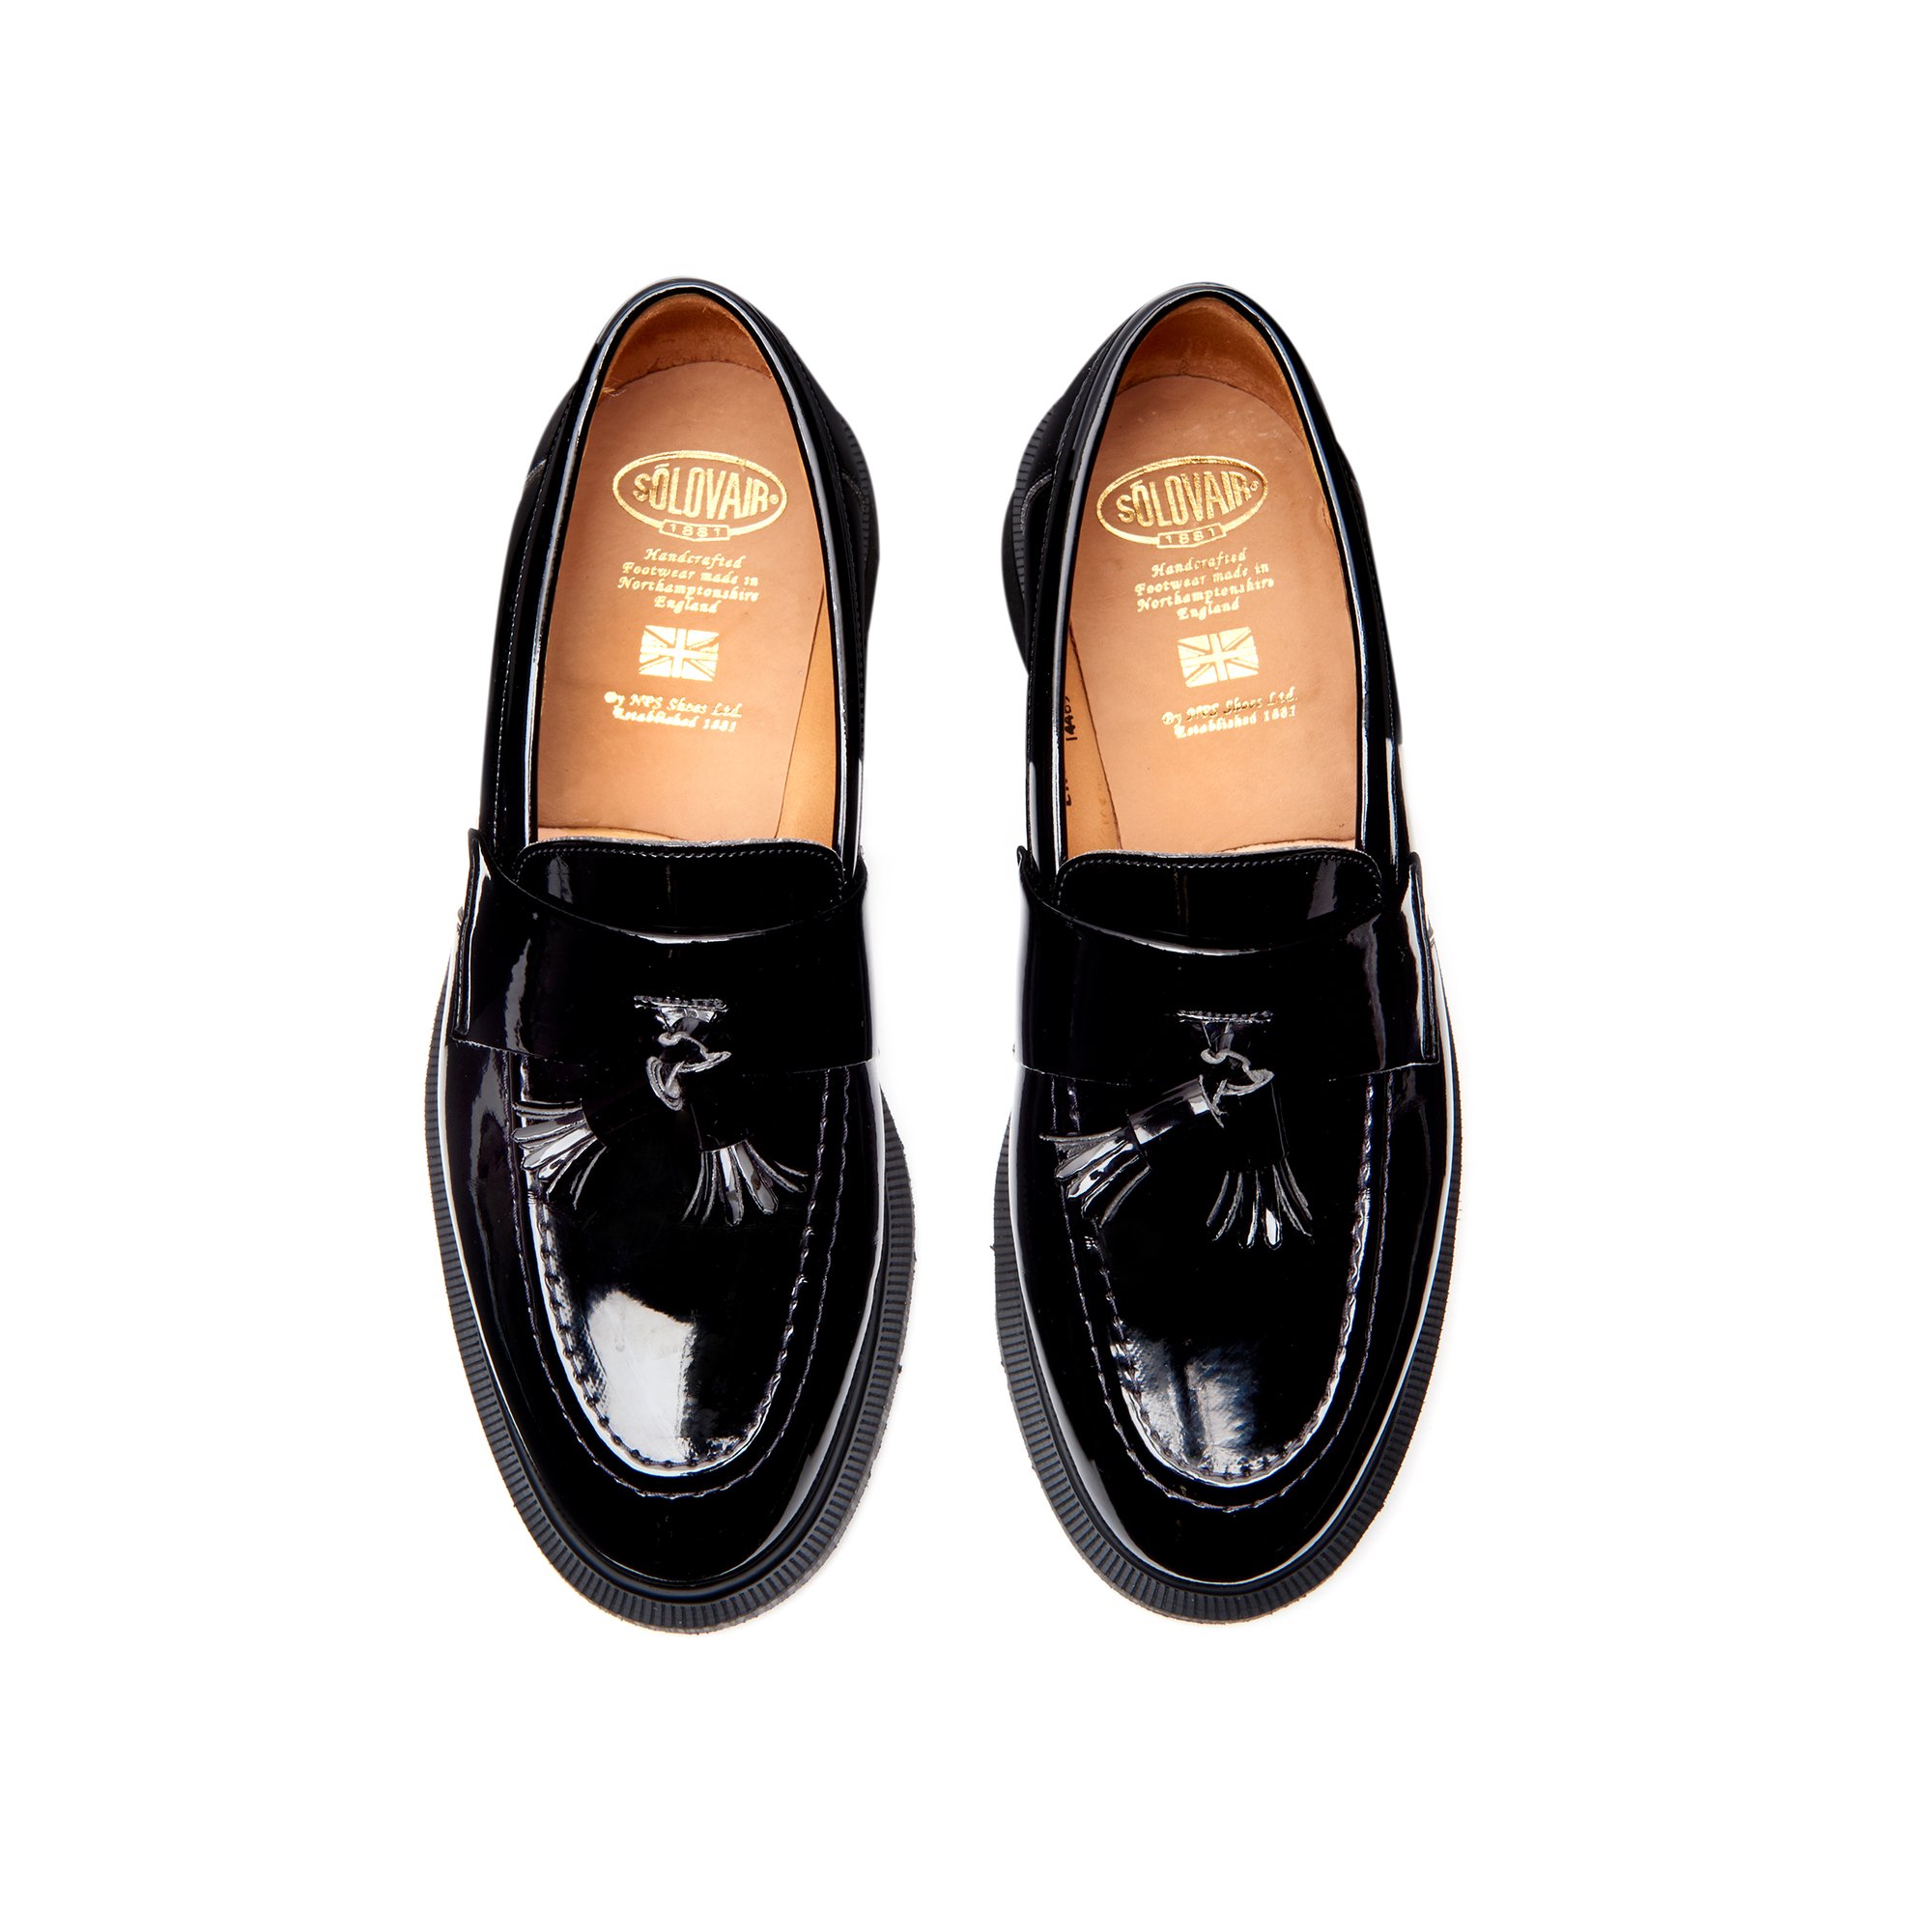 Solovair Black Patent Tassel Loafer - Pediwear Footwear